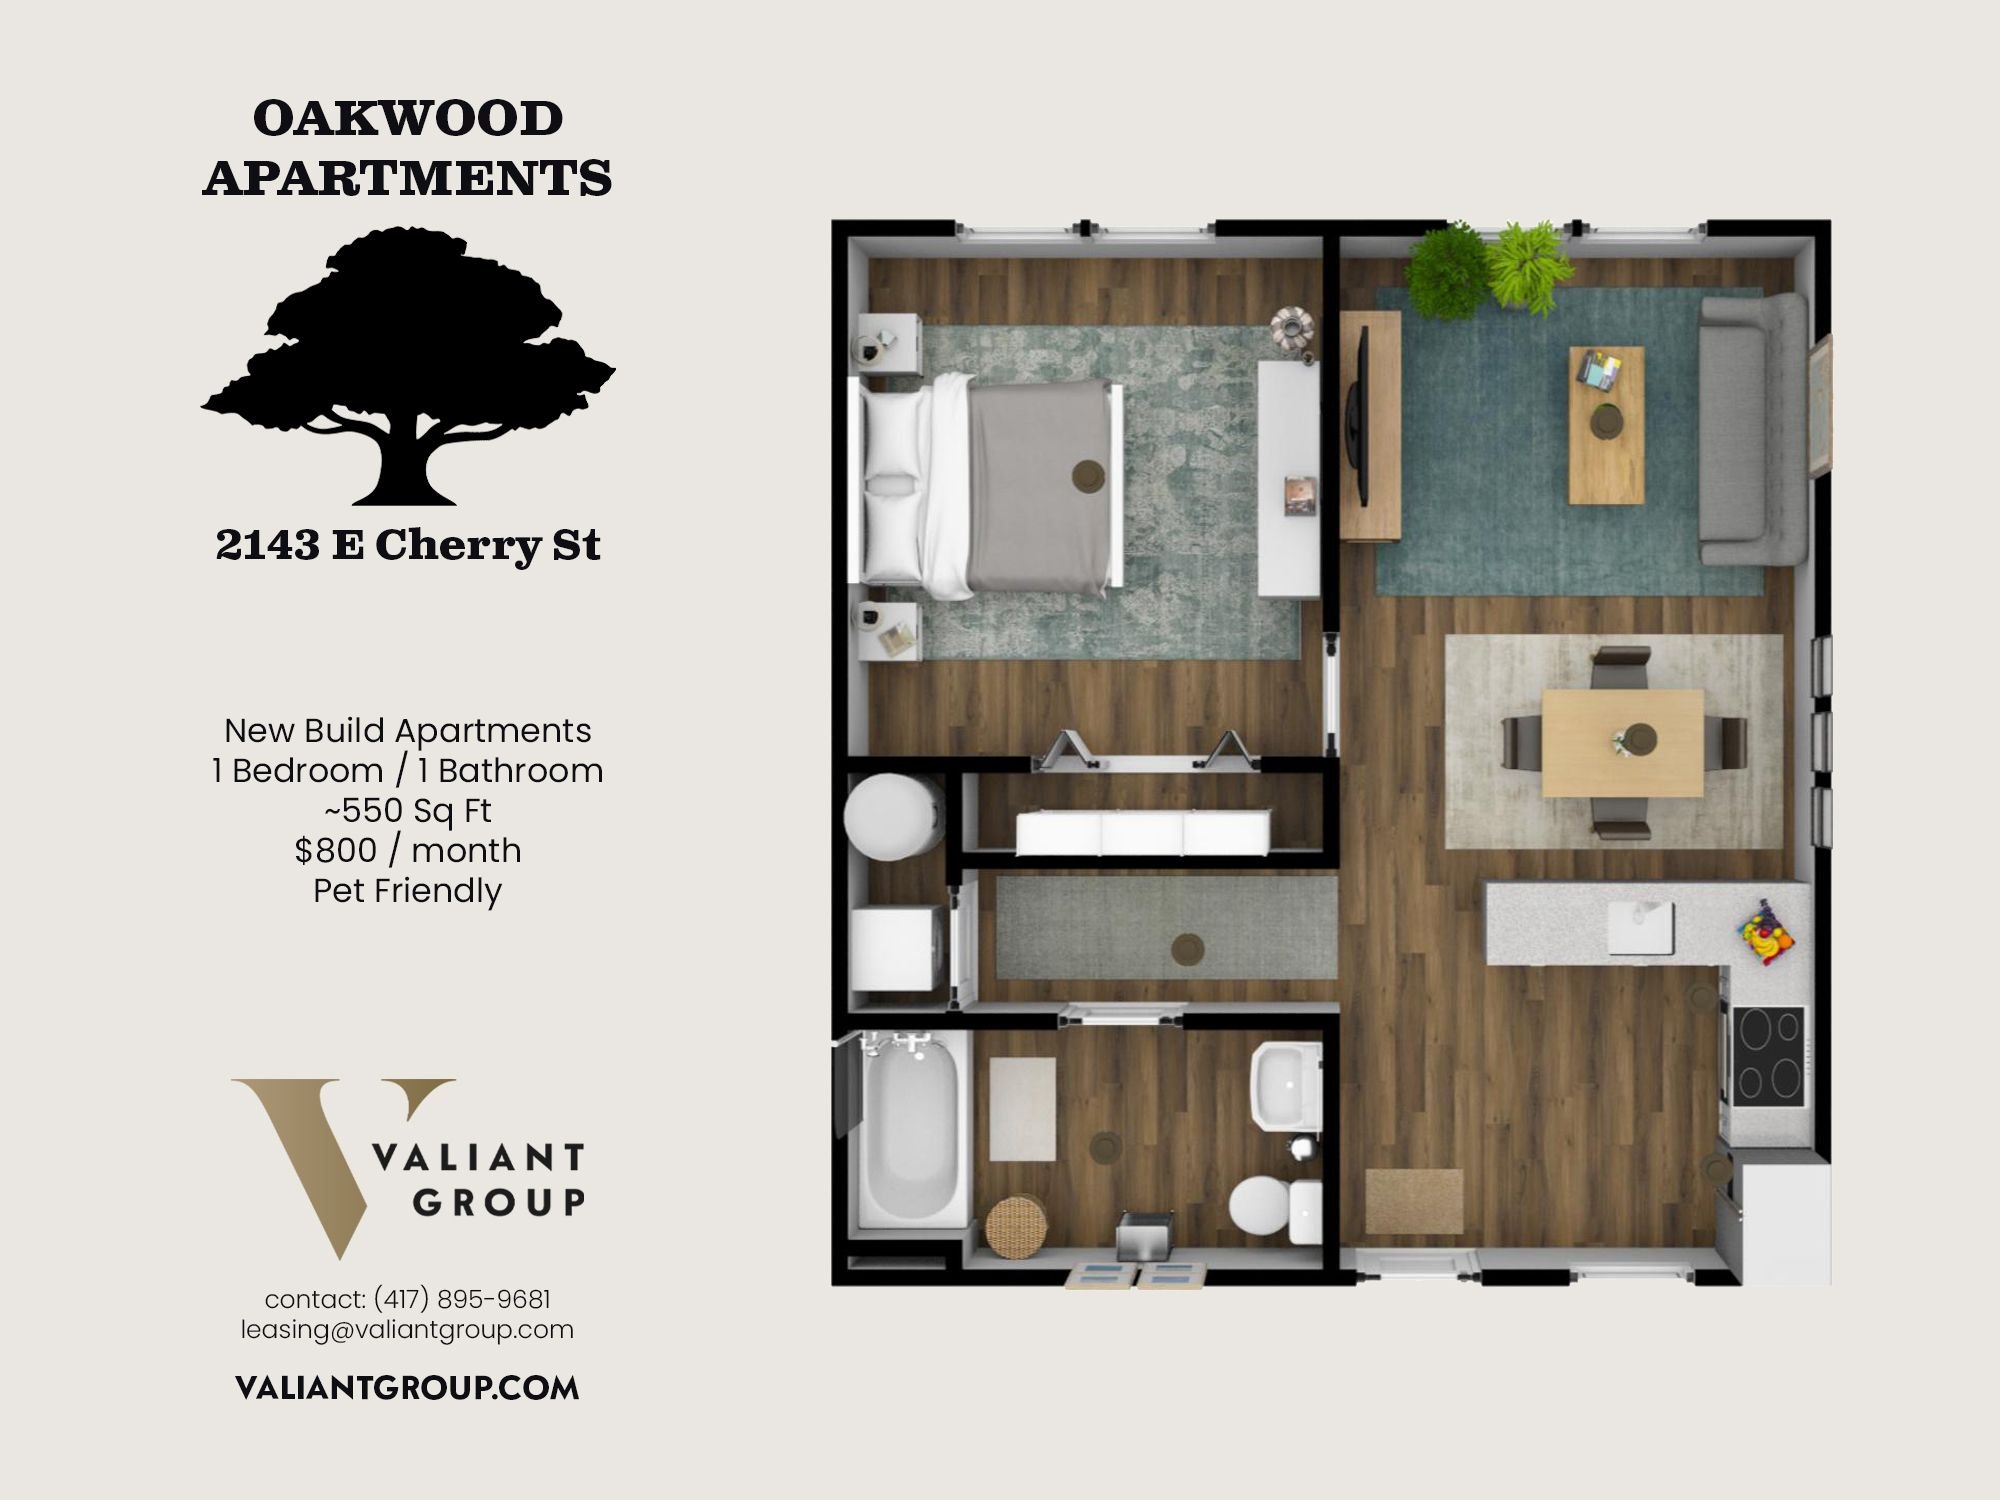 Oakwood-Apartments-2143-Cherry- Floorplan-Graphic-Listing-compressed.jpg